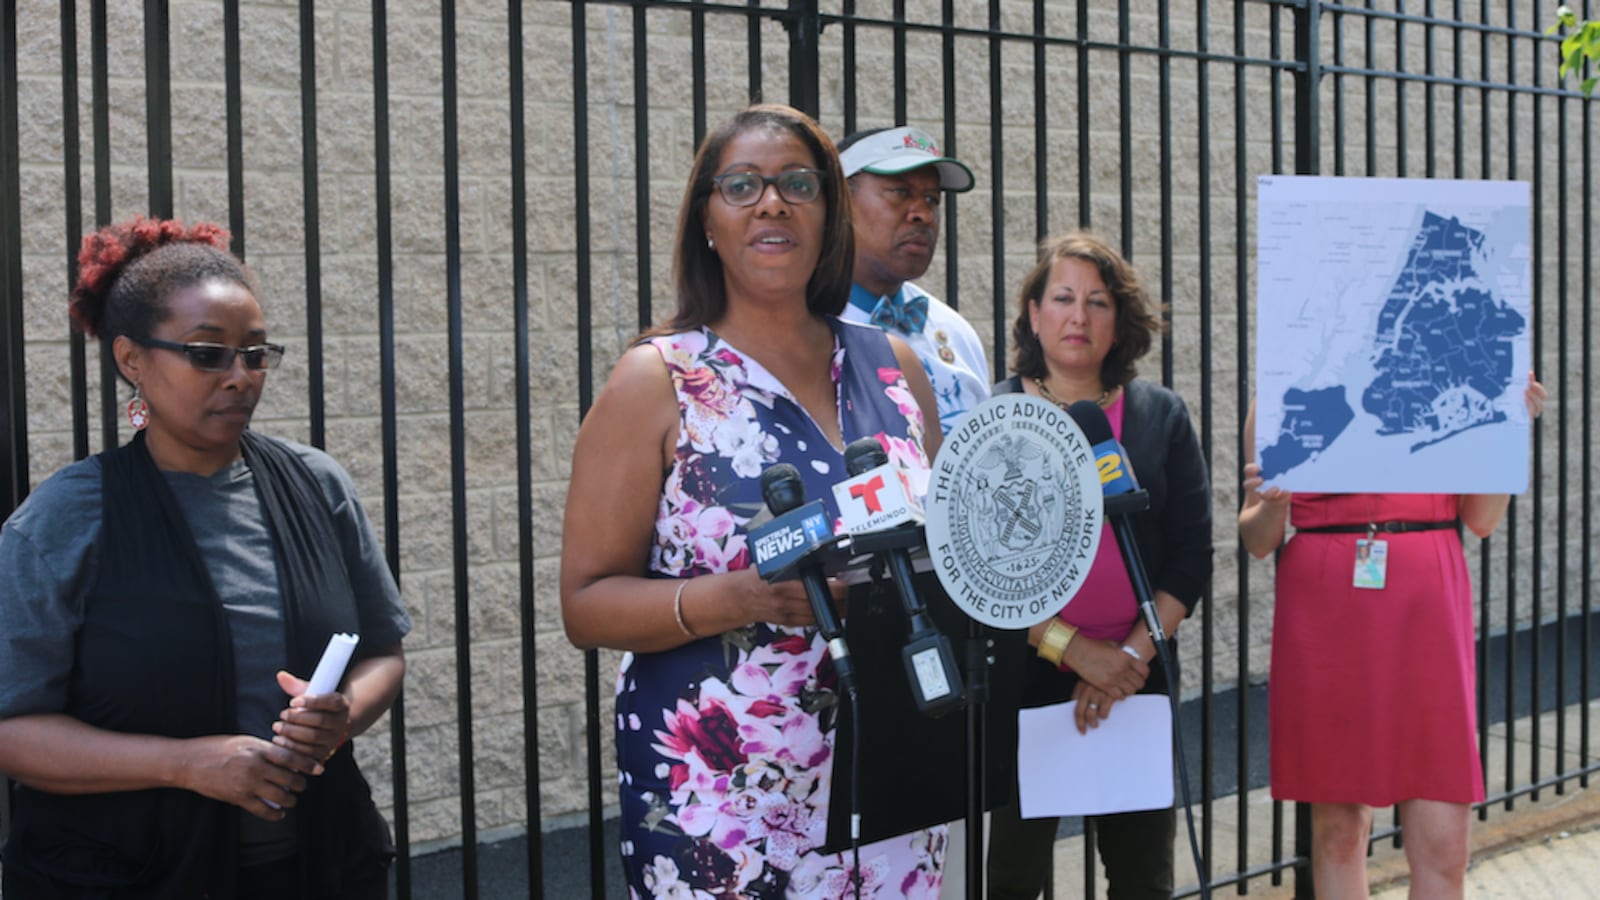 Public Advocate Letitia James announced a report earlier this month criticizing the city's special education voucher program.